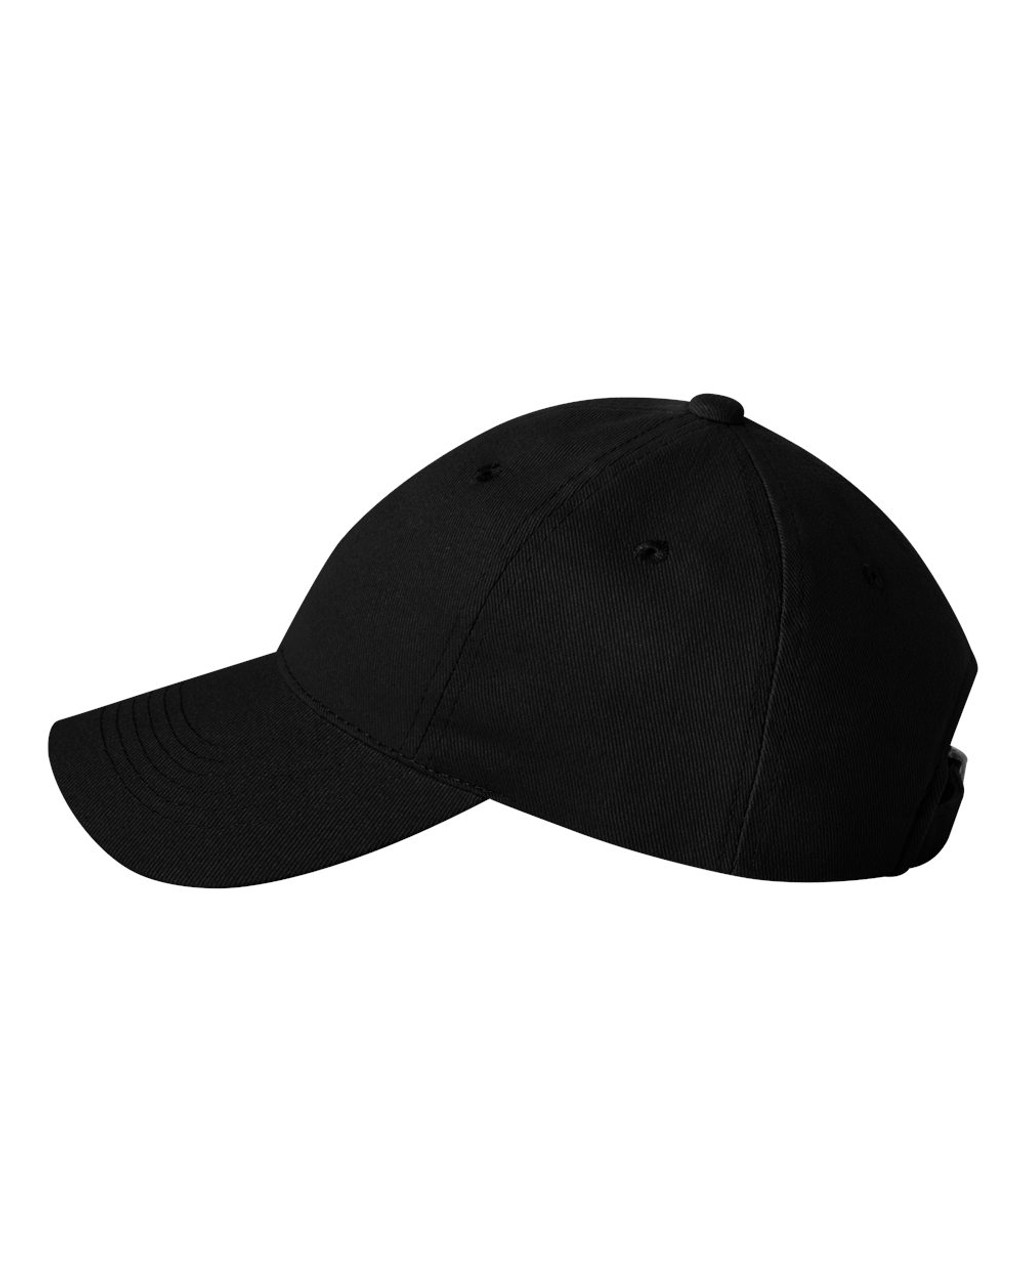 Mari Kyrios Misfit Punk Rock Fiend Skull Hat Adult Black Twill Adjustable Cap